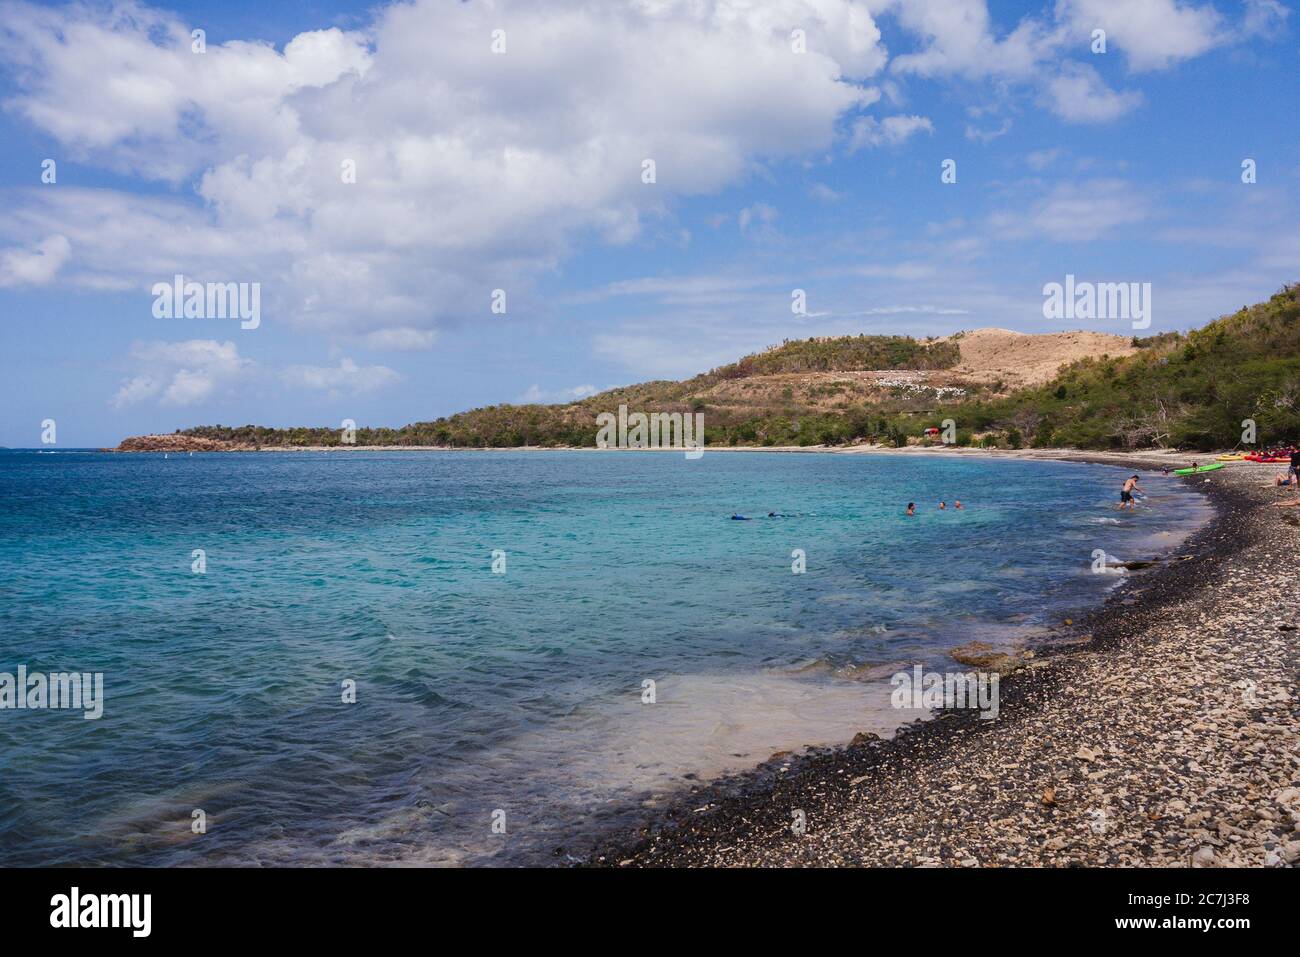 Tourists swimming in Caribbean Sea at Playa Tamarindo in Culebra, Puerto Rico Stock Photo